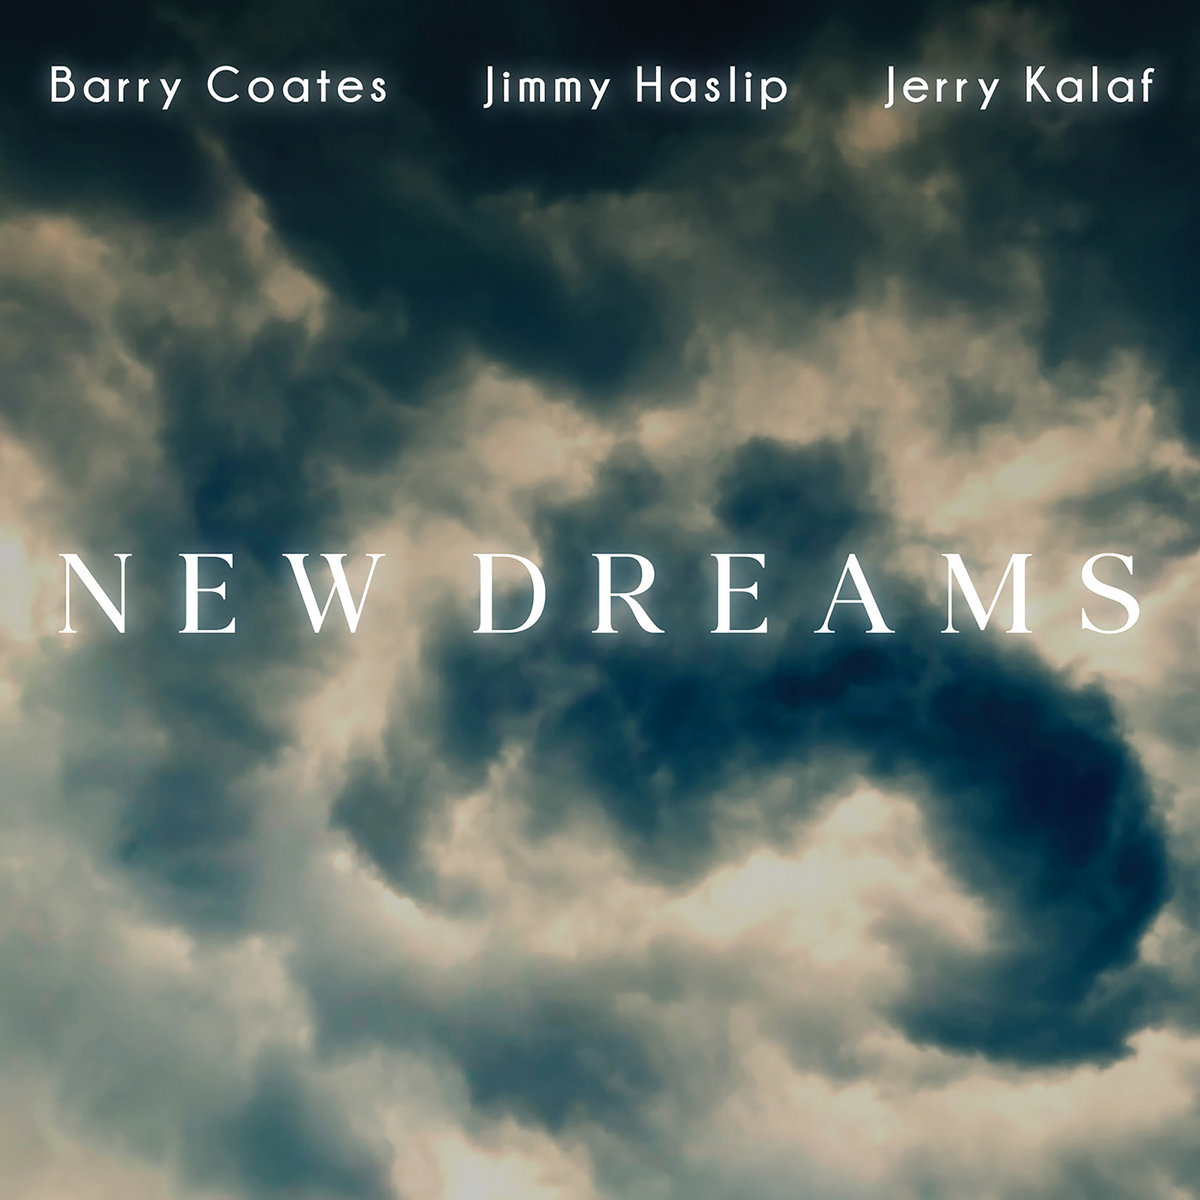 Jimmy Haslip/Barry Coates
New Dreams